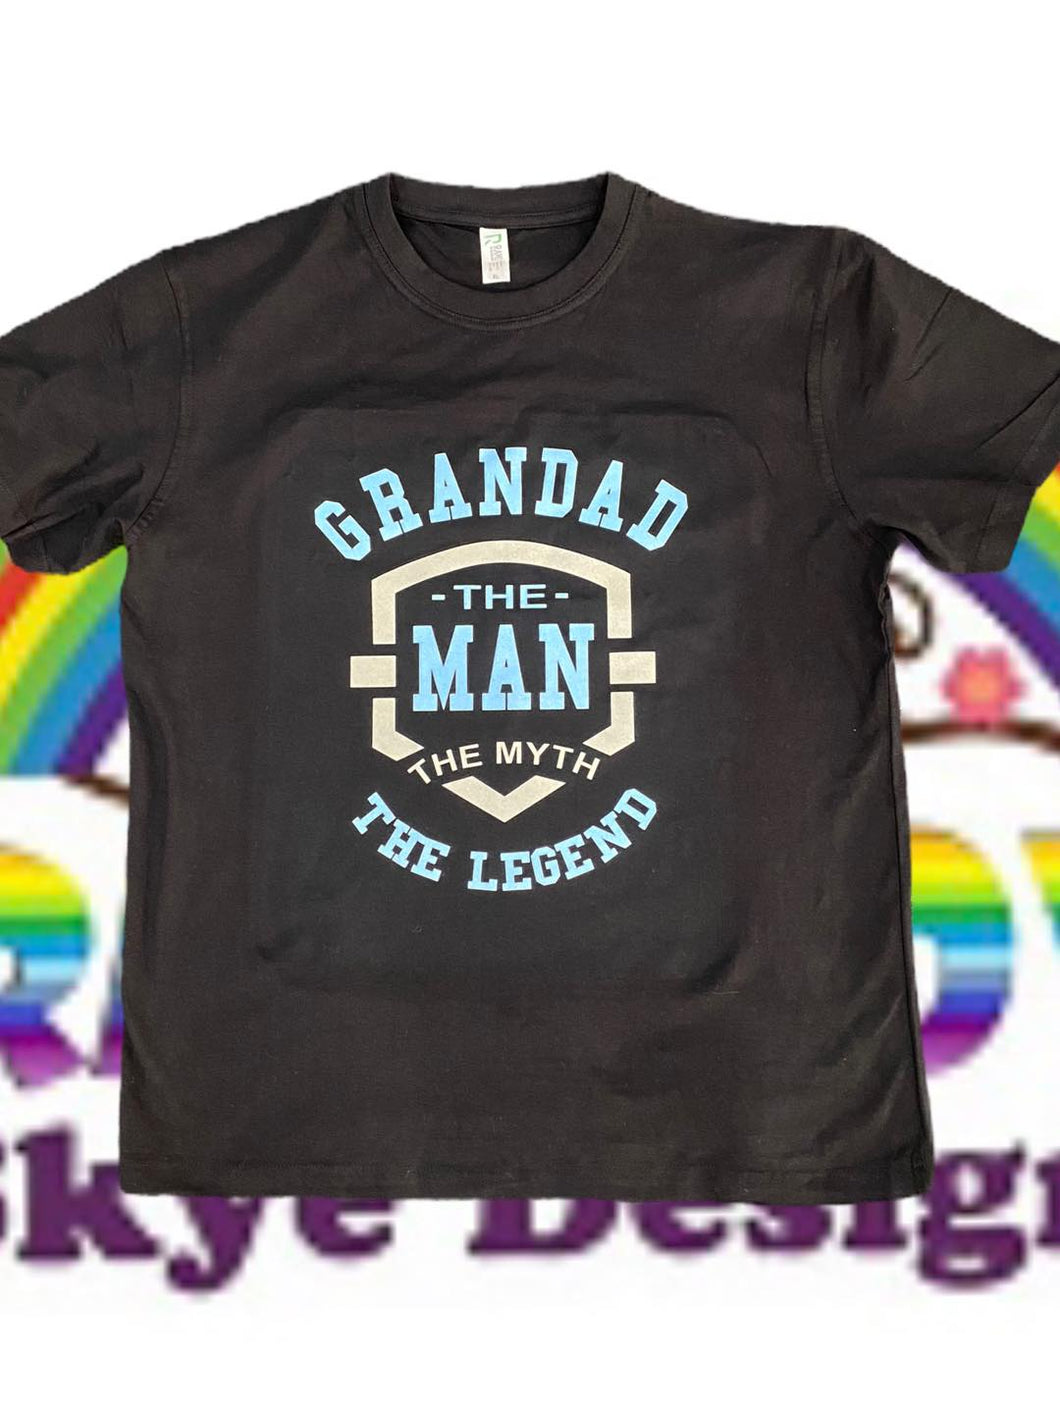 Grandad the man the myth the legend tshirt